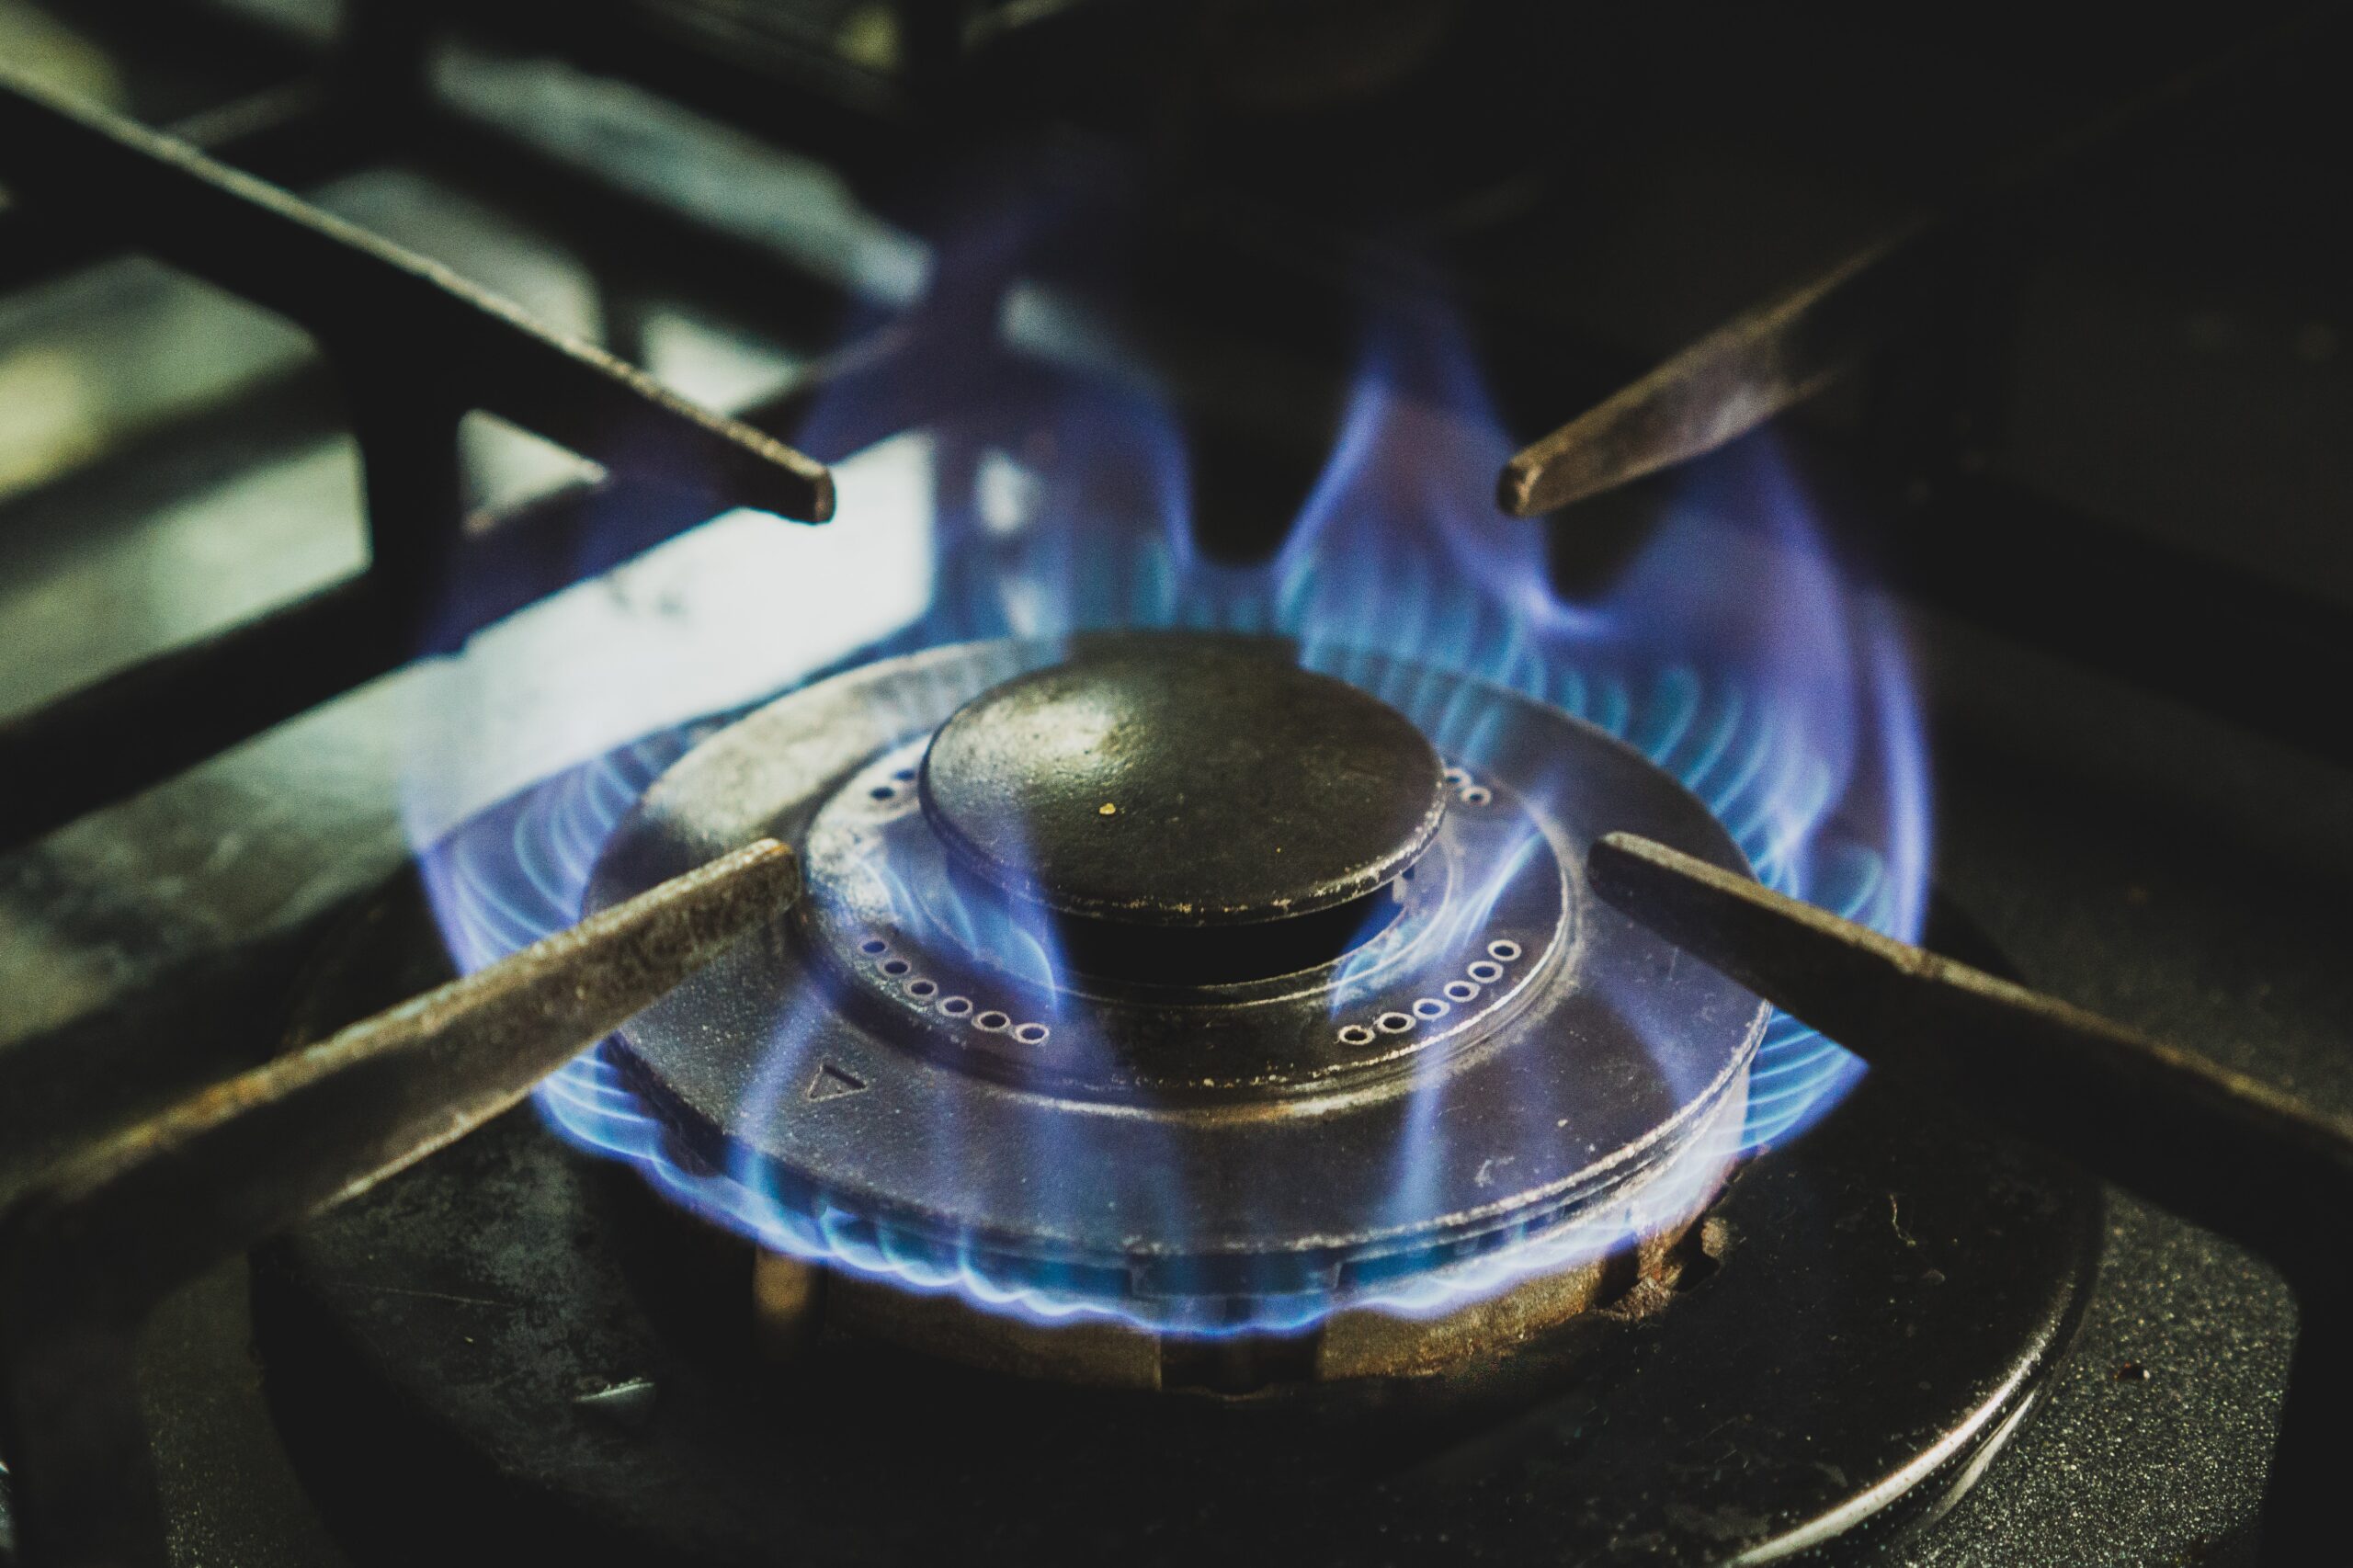 Burner on a gas stove